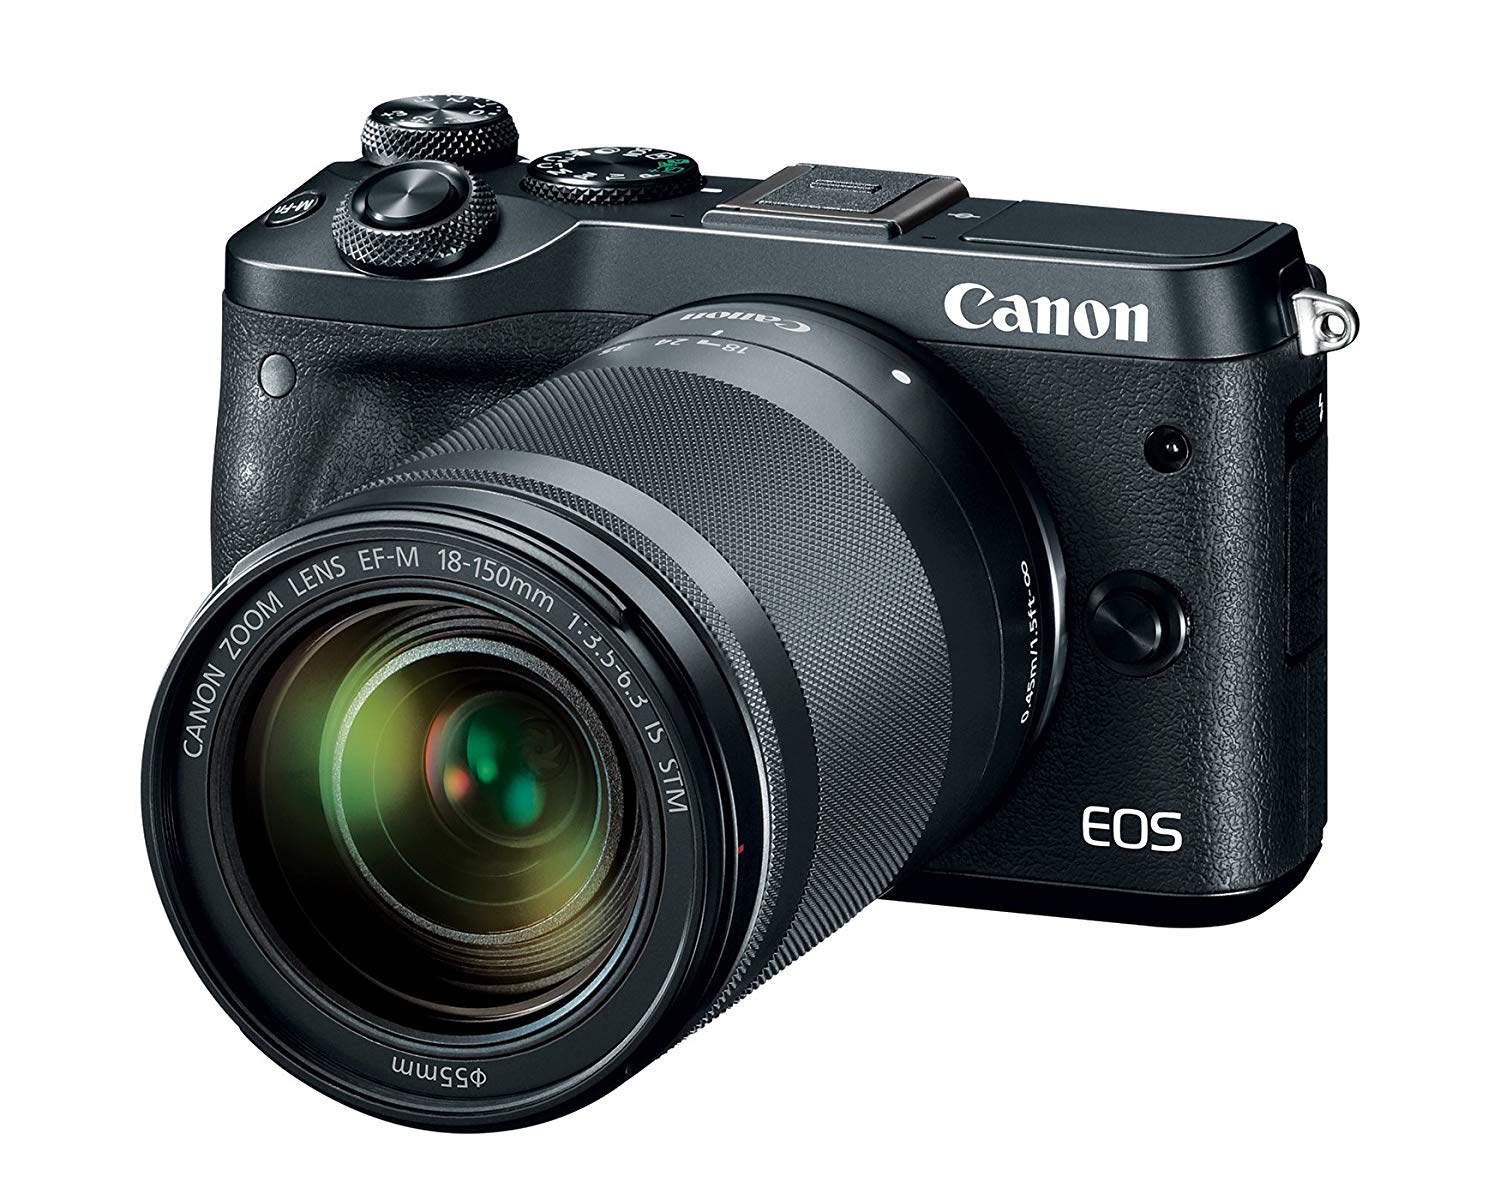 Canon EOS M6 (preto) 18-150 mm f / 3.5-6.3 IS STM Kit